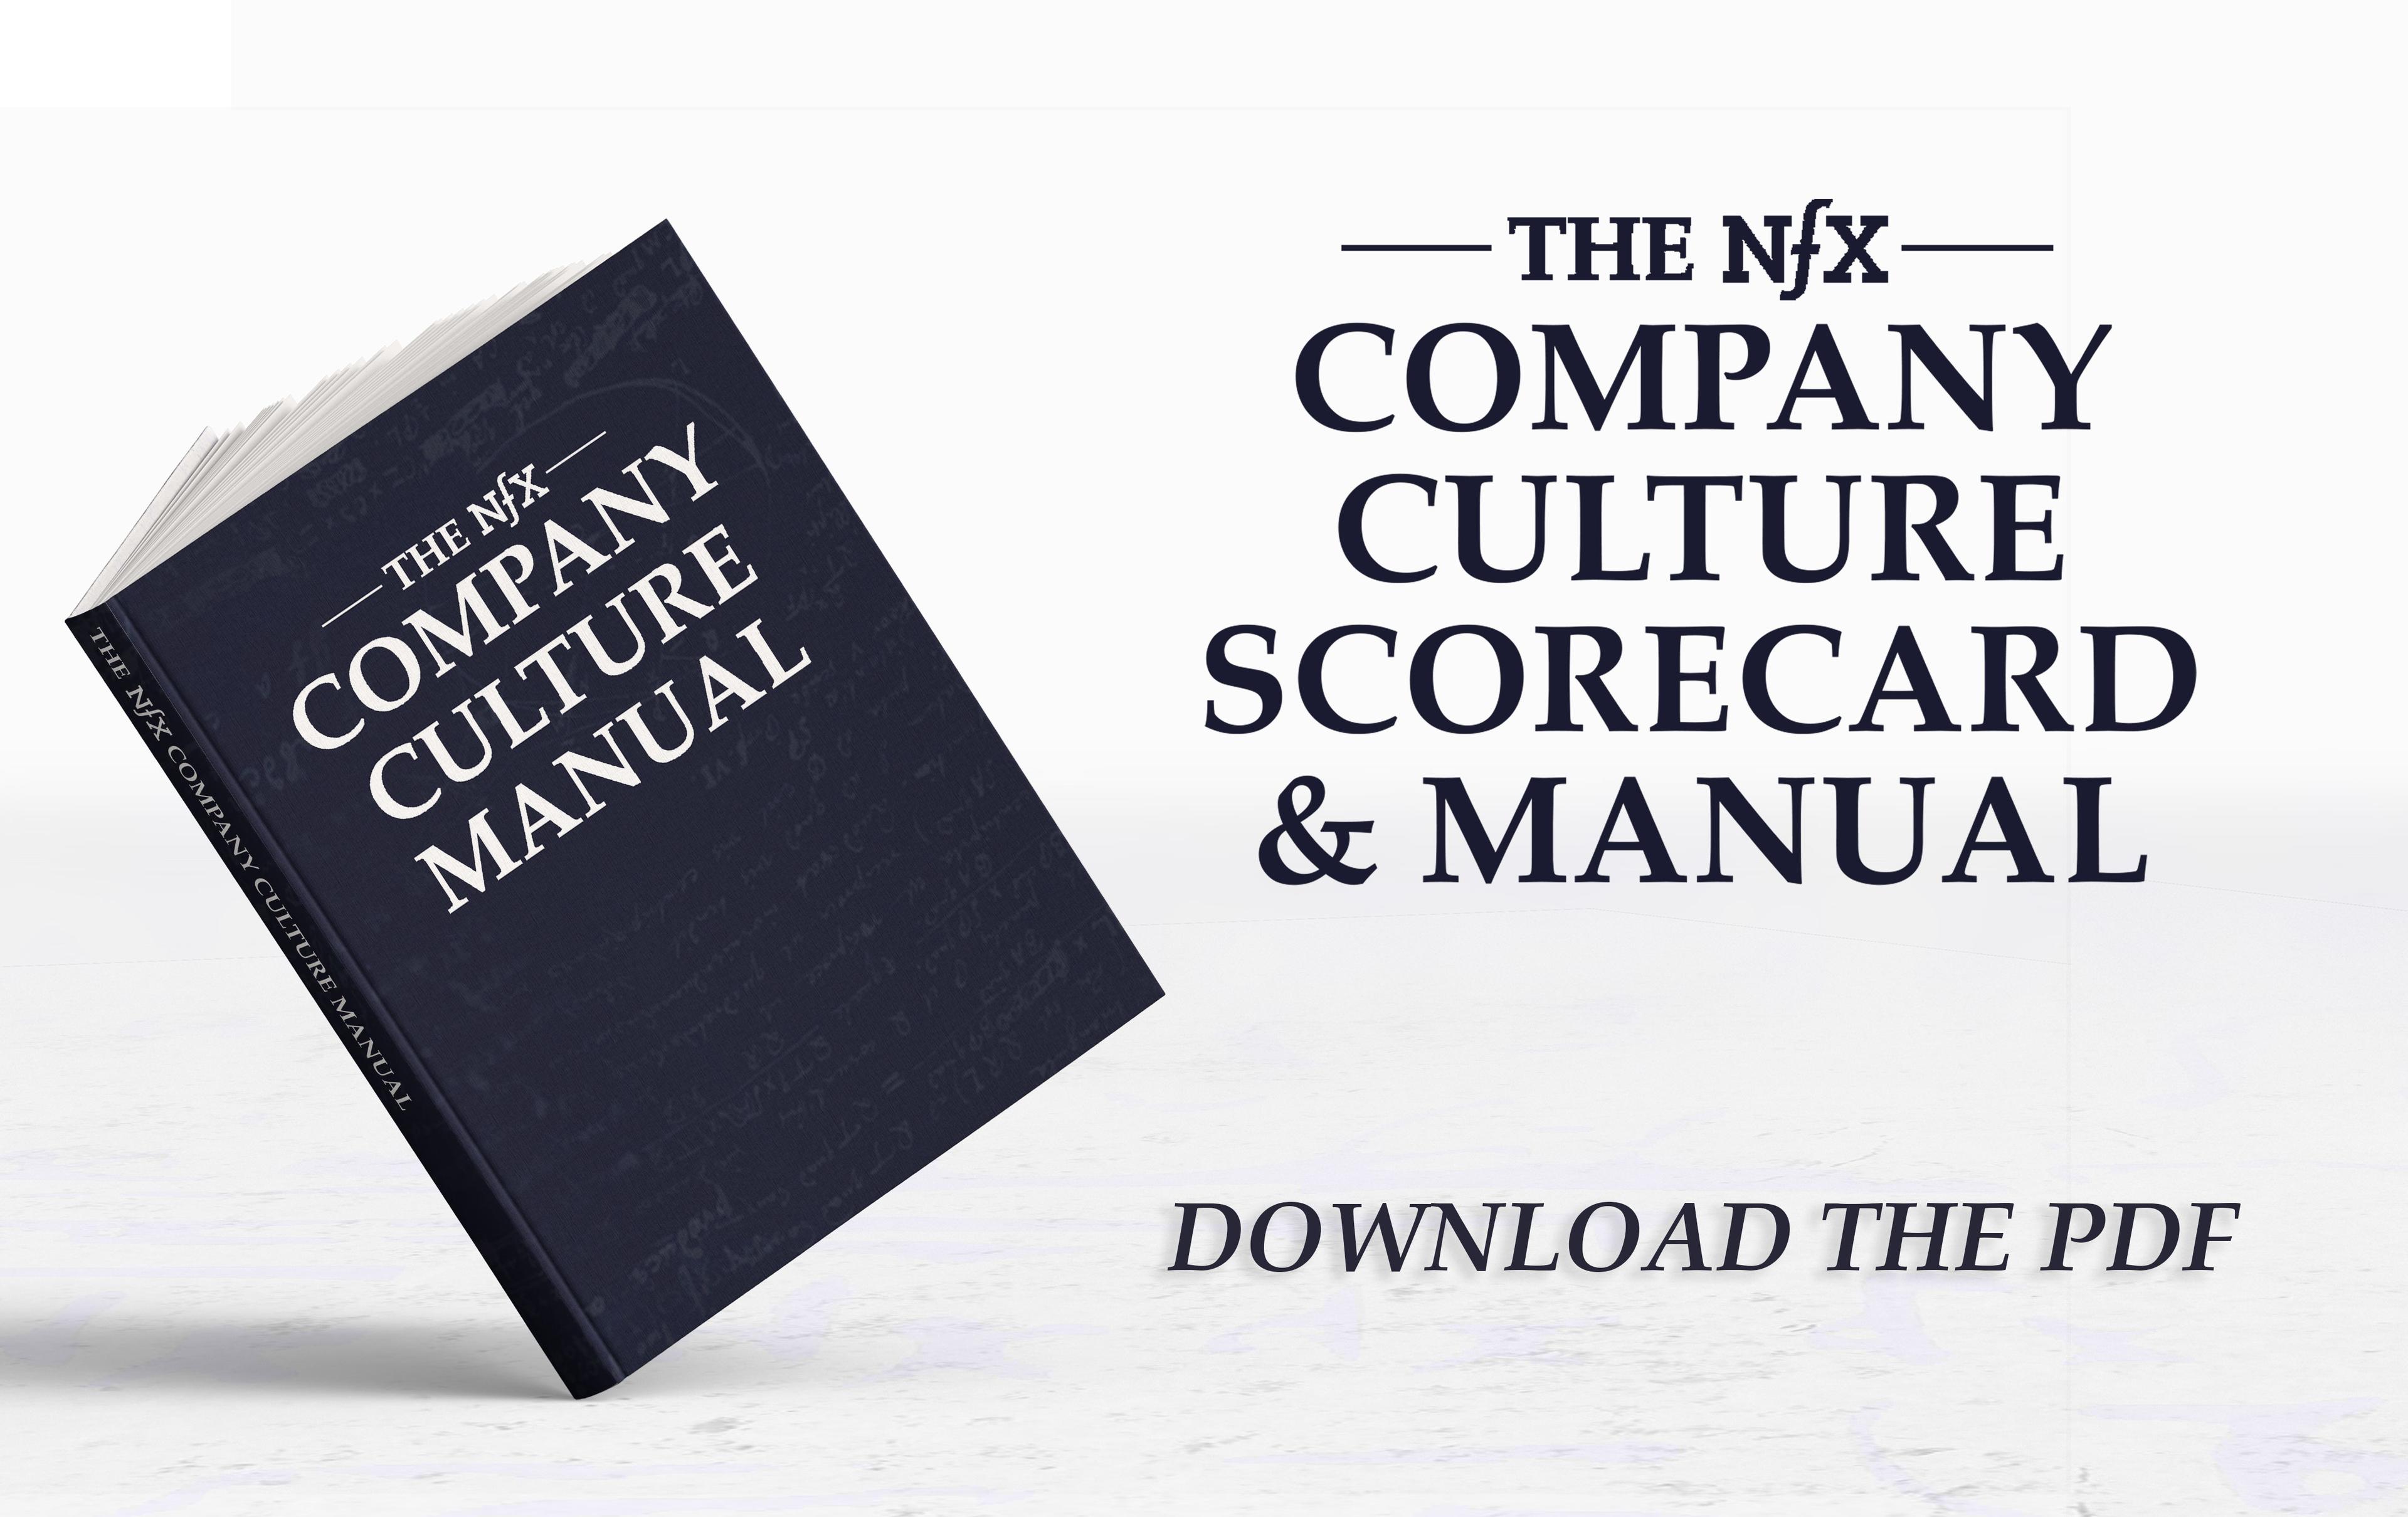 The NFX Company Culture Scorecard and Manual Download PDF